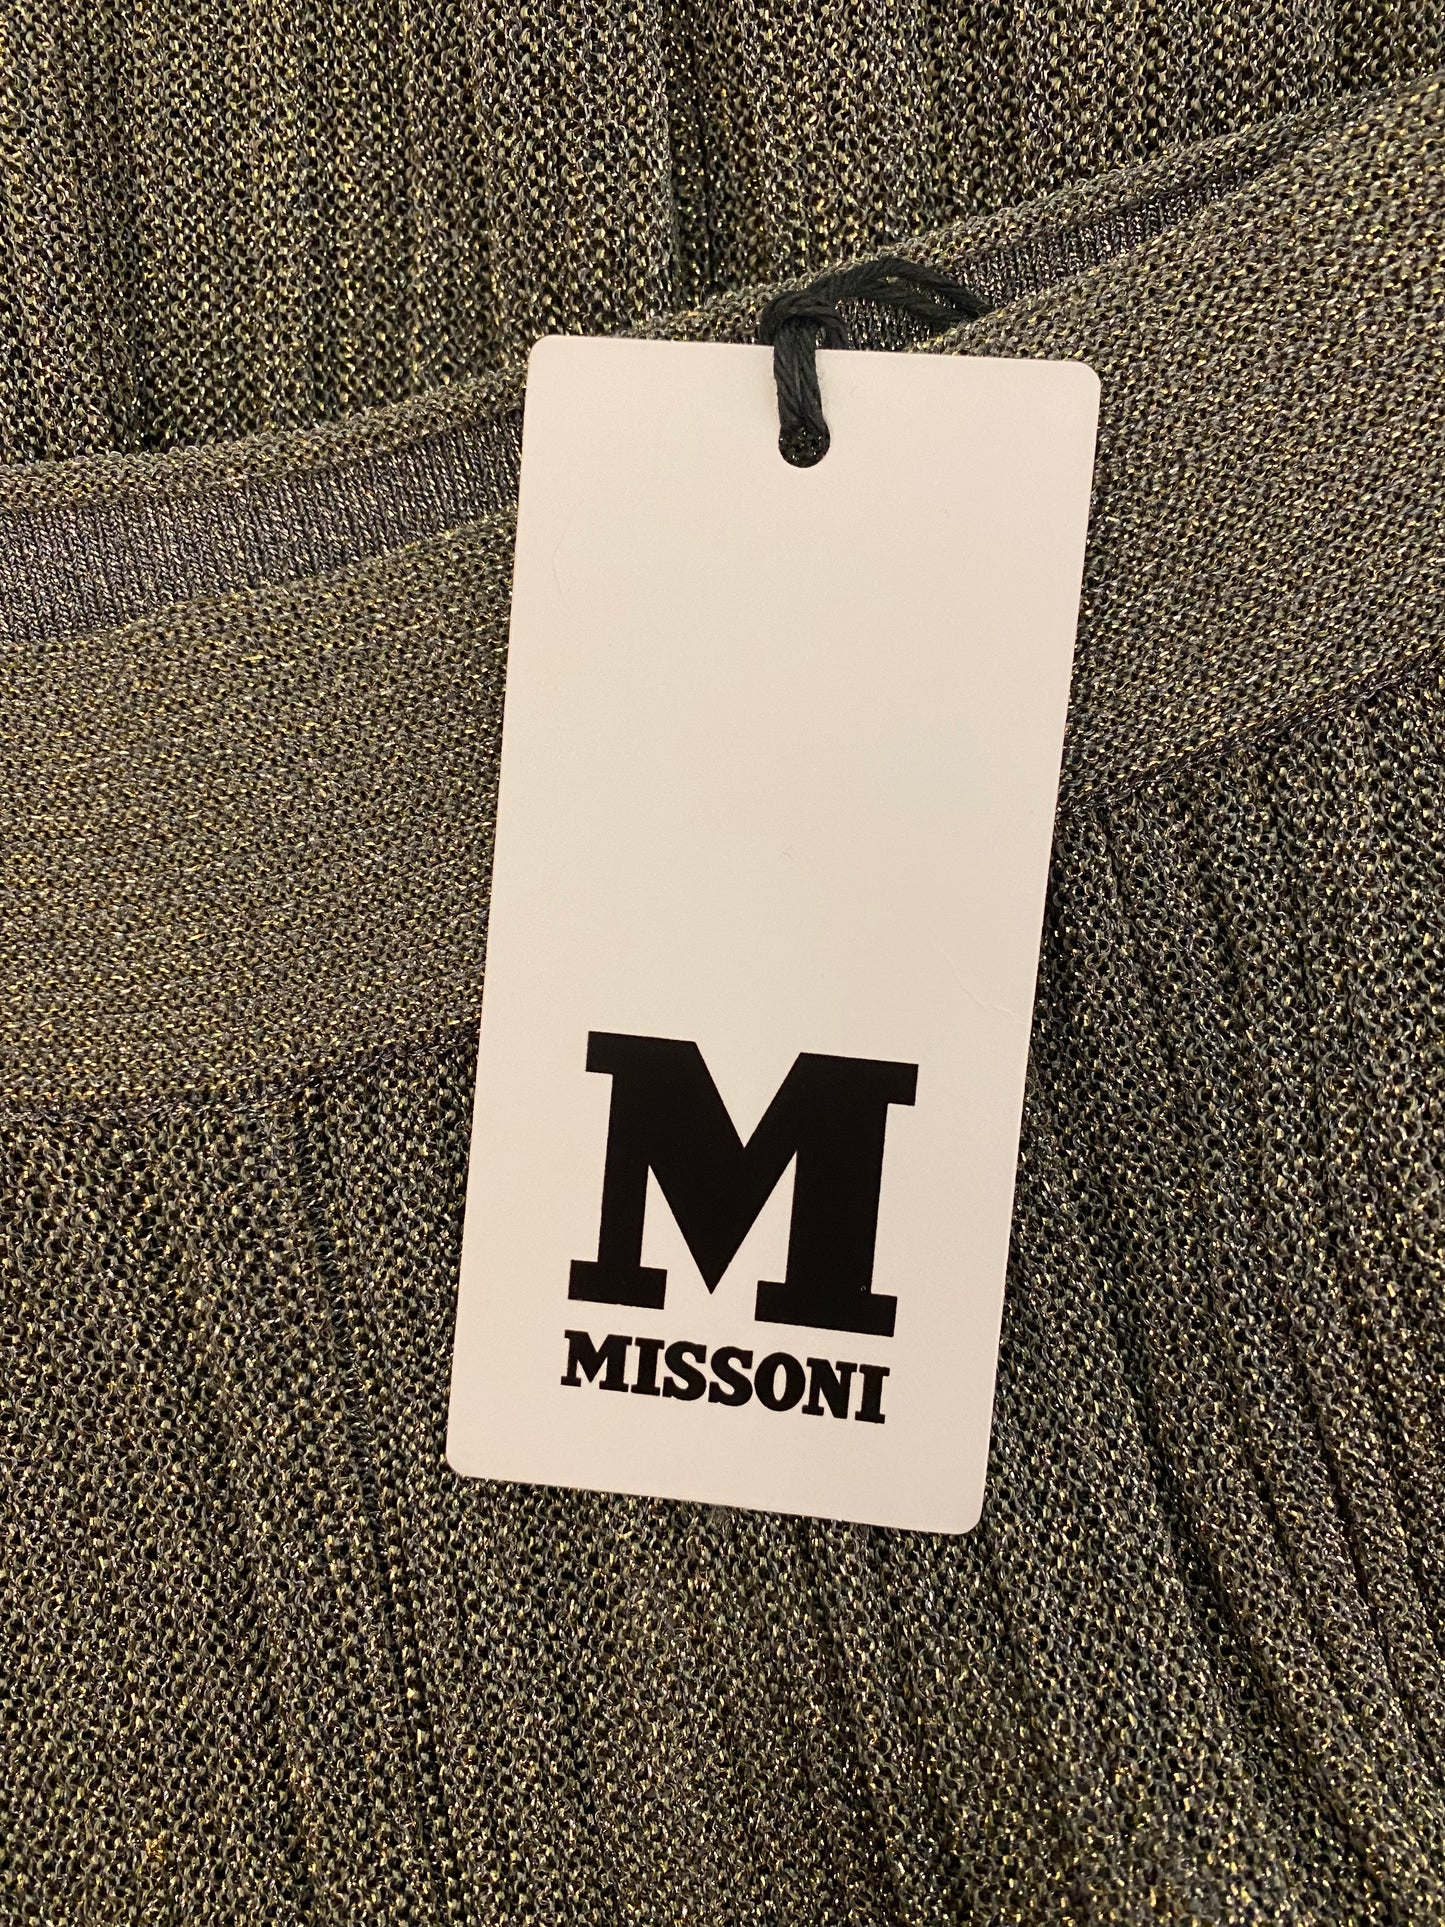 M MISSONI Gold Metallic Trousers Size It 40